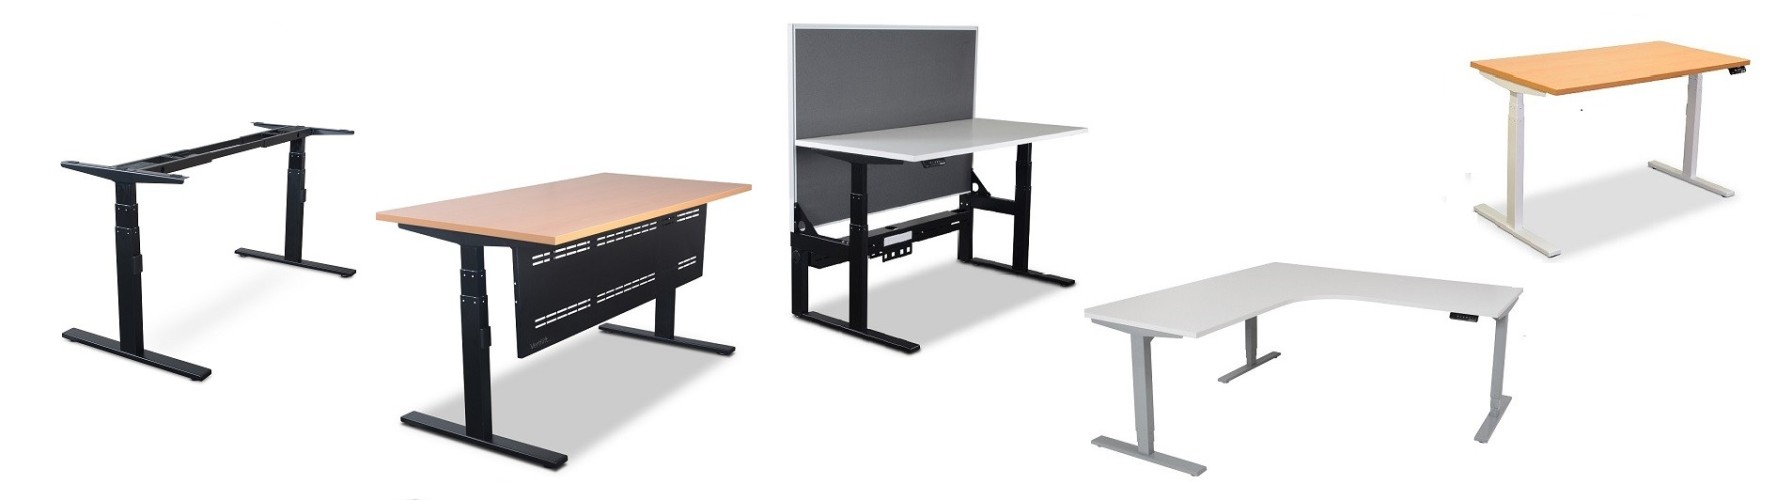 Desk - Vertilft 3 Leg Corner Electric